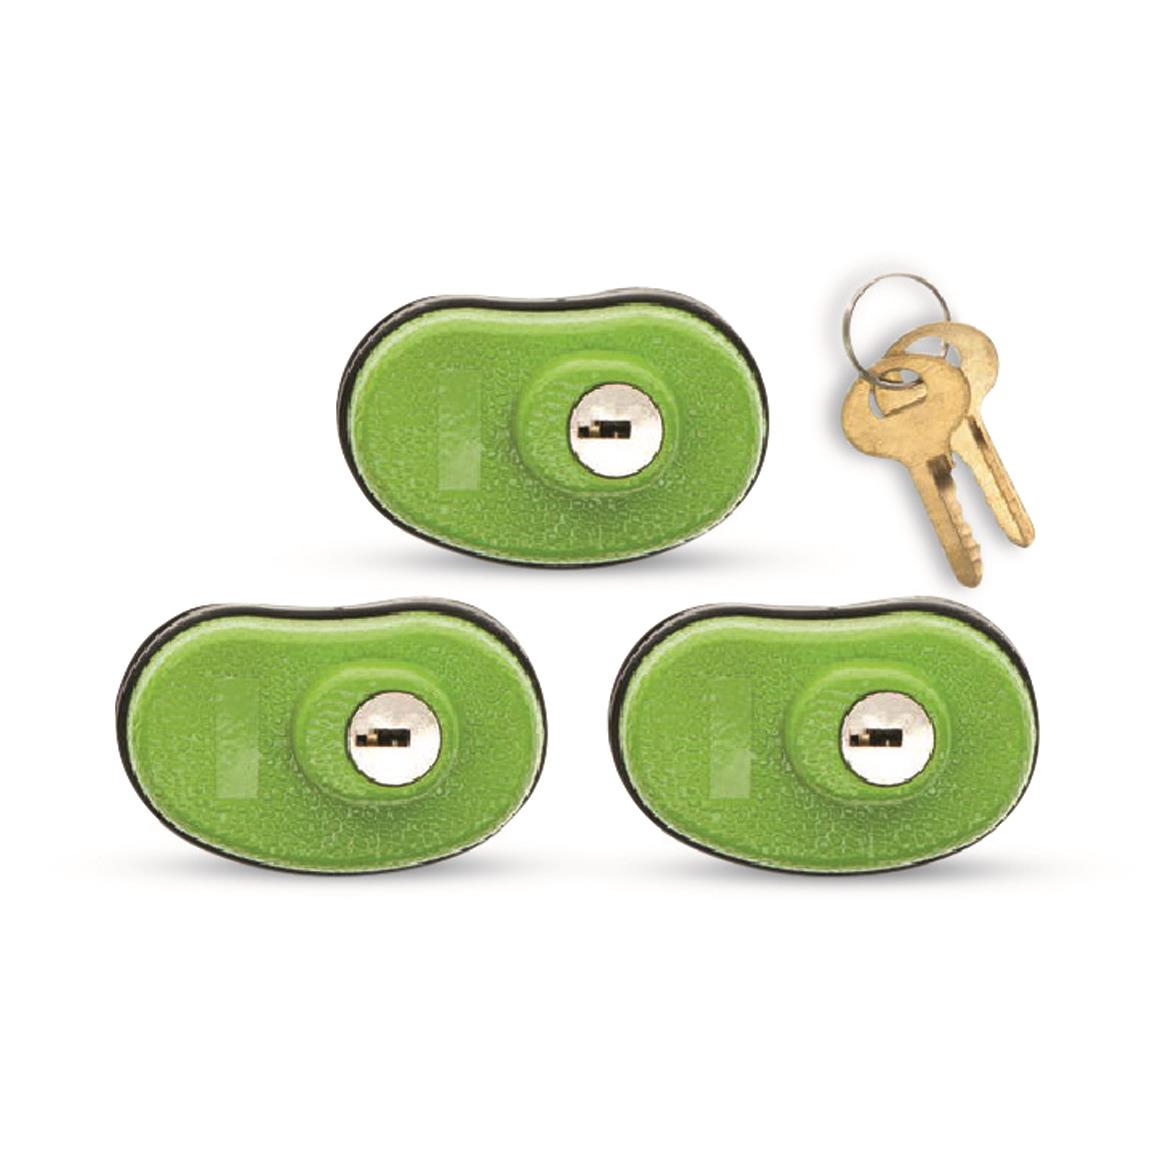 Lockdown Keyed Trigger Locks, 3 Pack